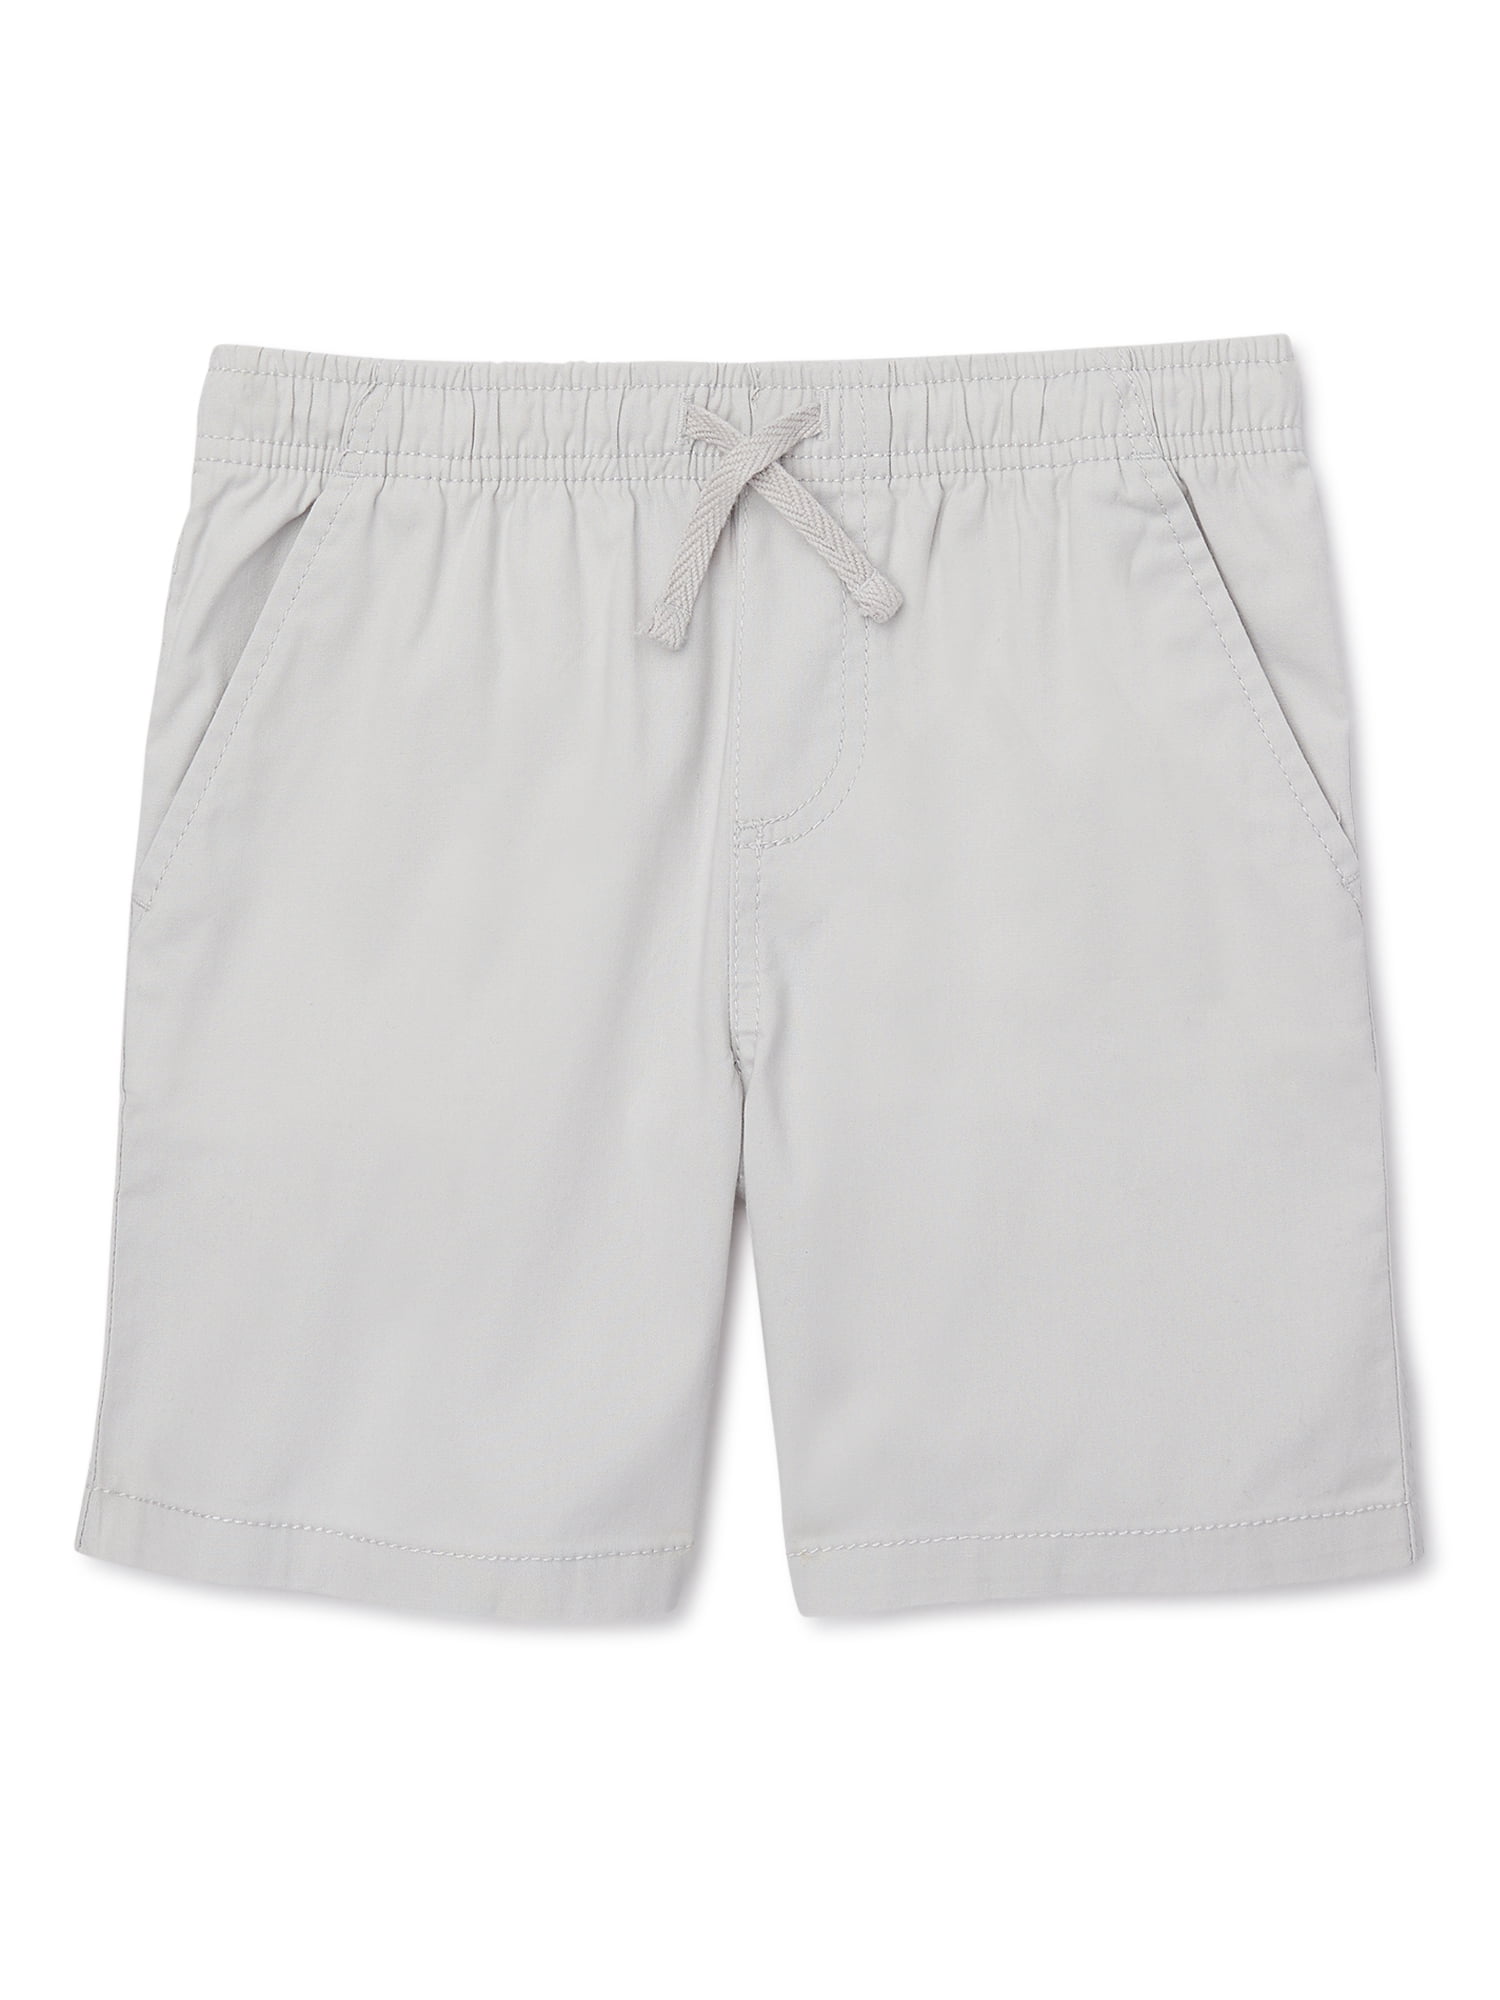 Wonder Nation Boys Pull On Shorts, Sizes 4-18 & Husky - Walmart.com